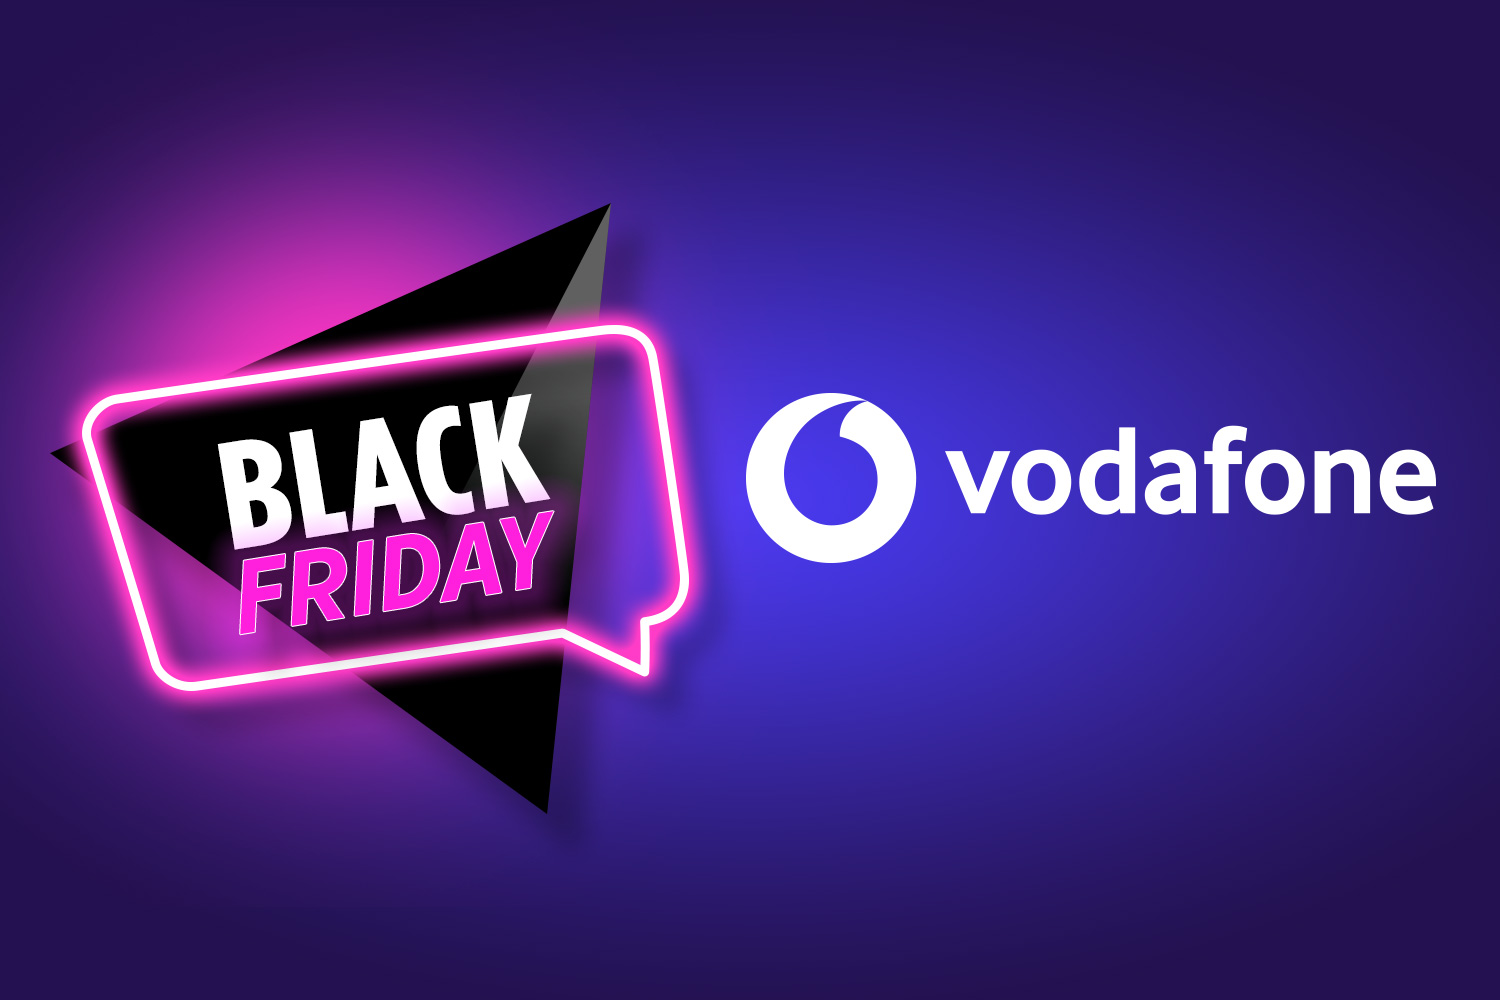 Vodafone Black Friday 2022 sale: Save up to £560 off smartphones